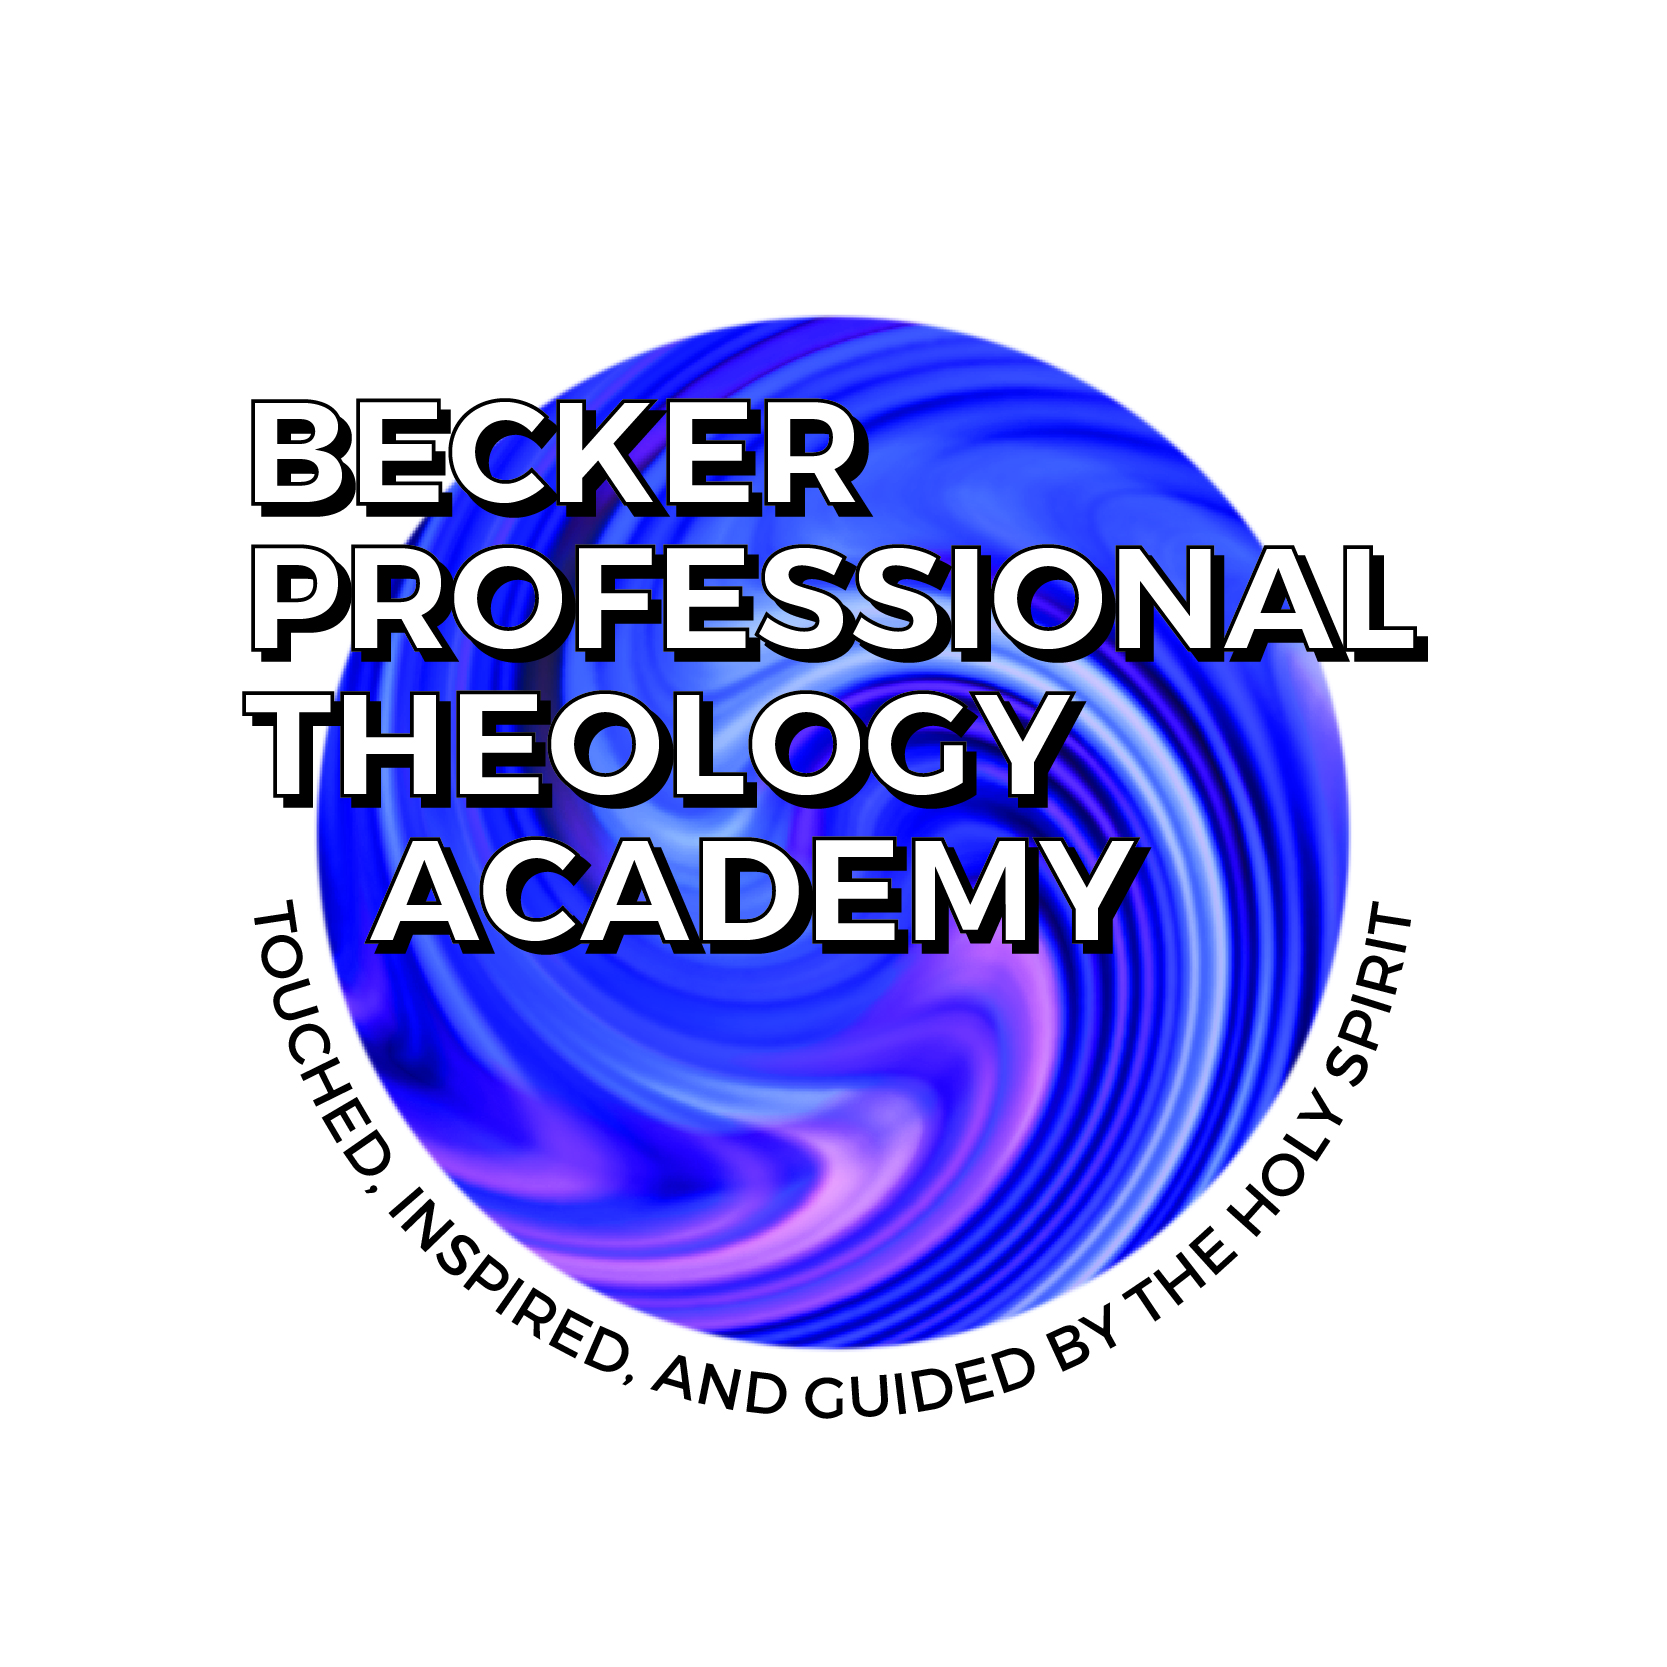 Becker Professional Theology Academy logo